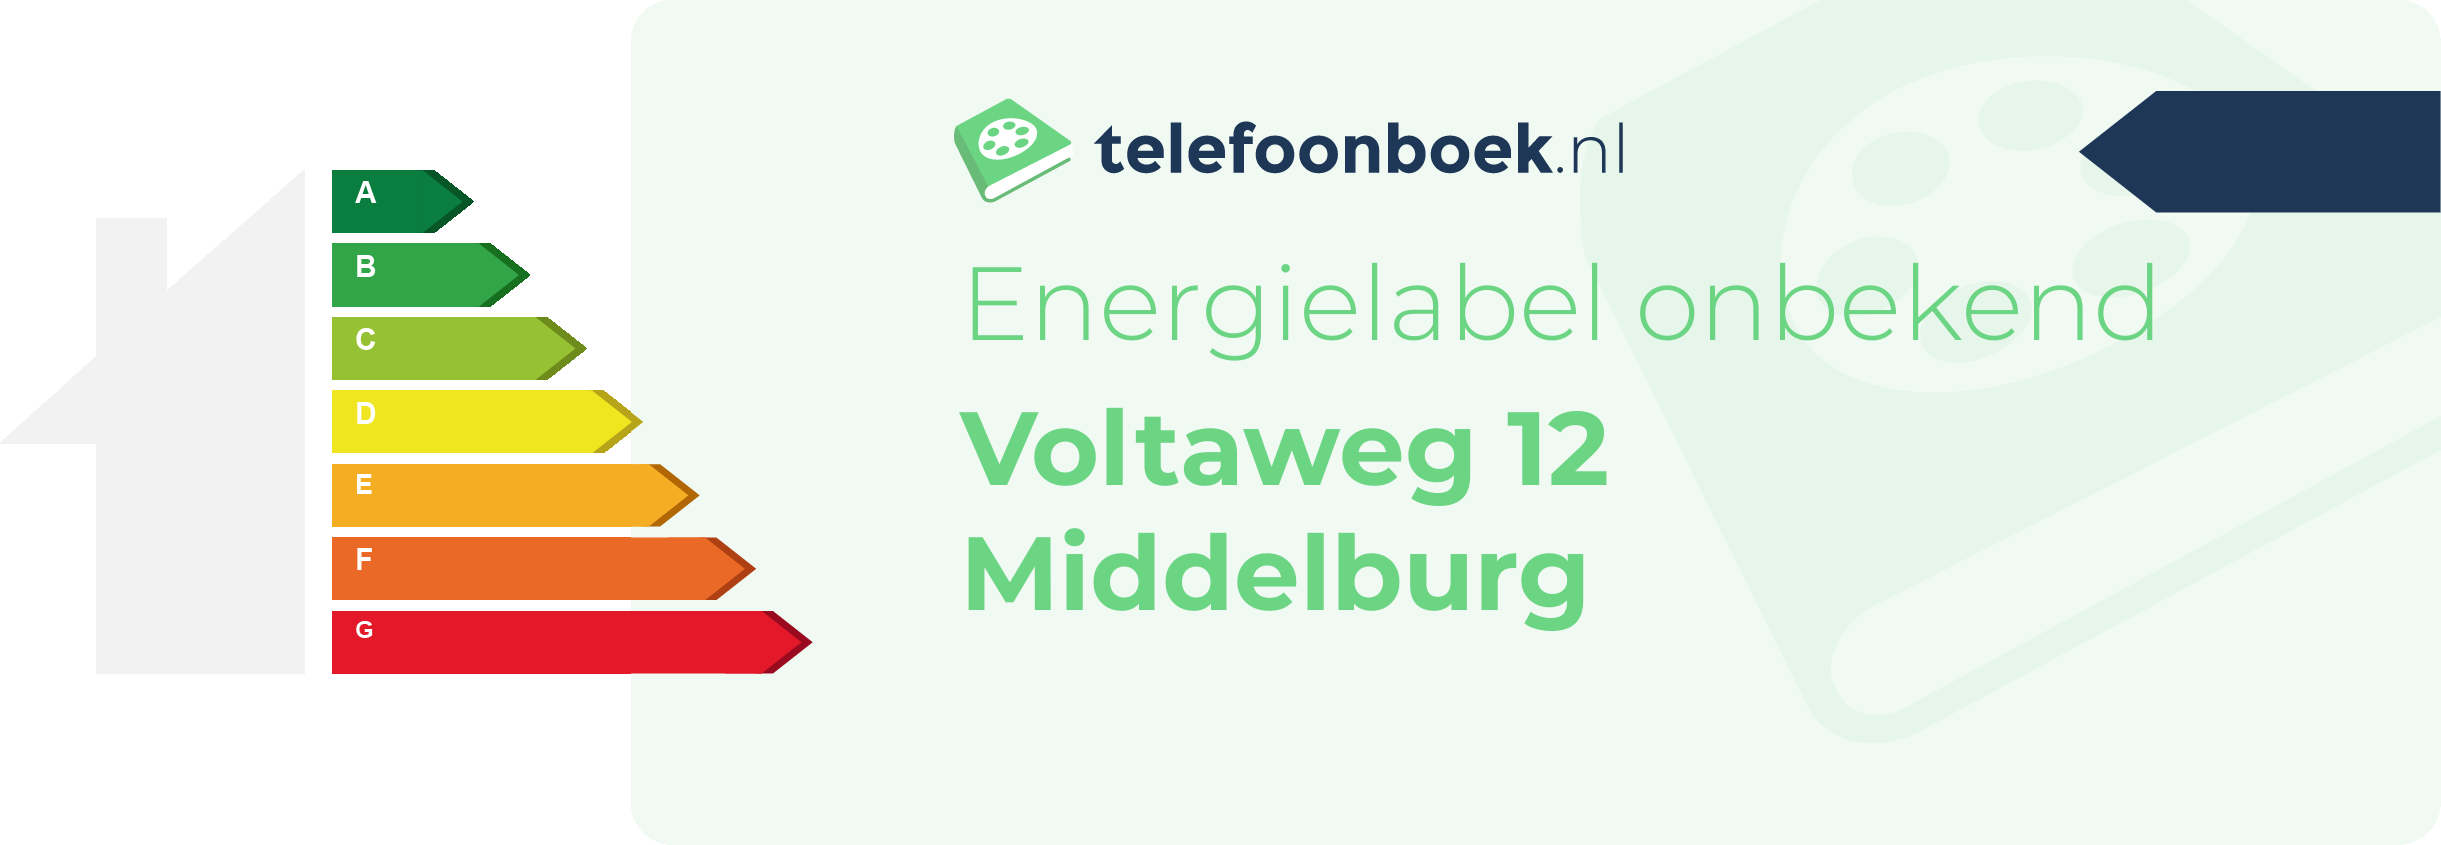 Energielabel Voltaweg 12 Middelburg